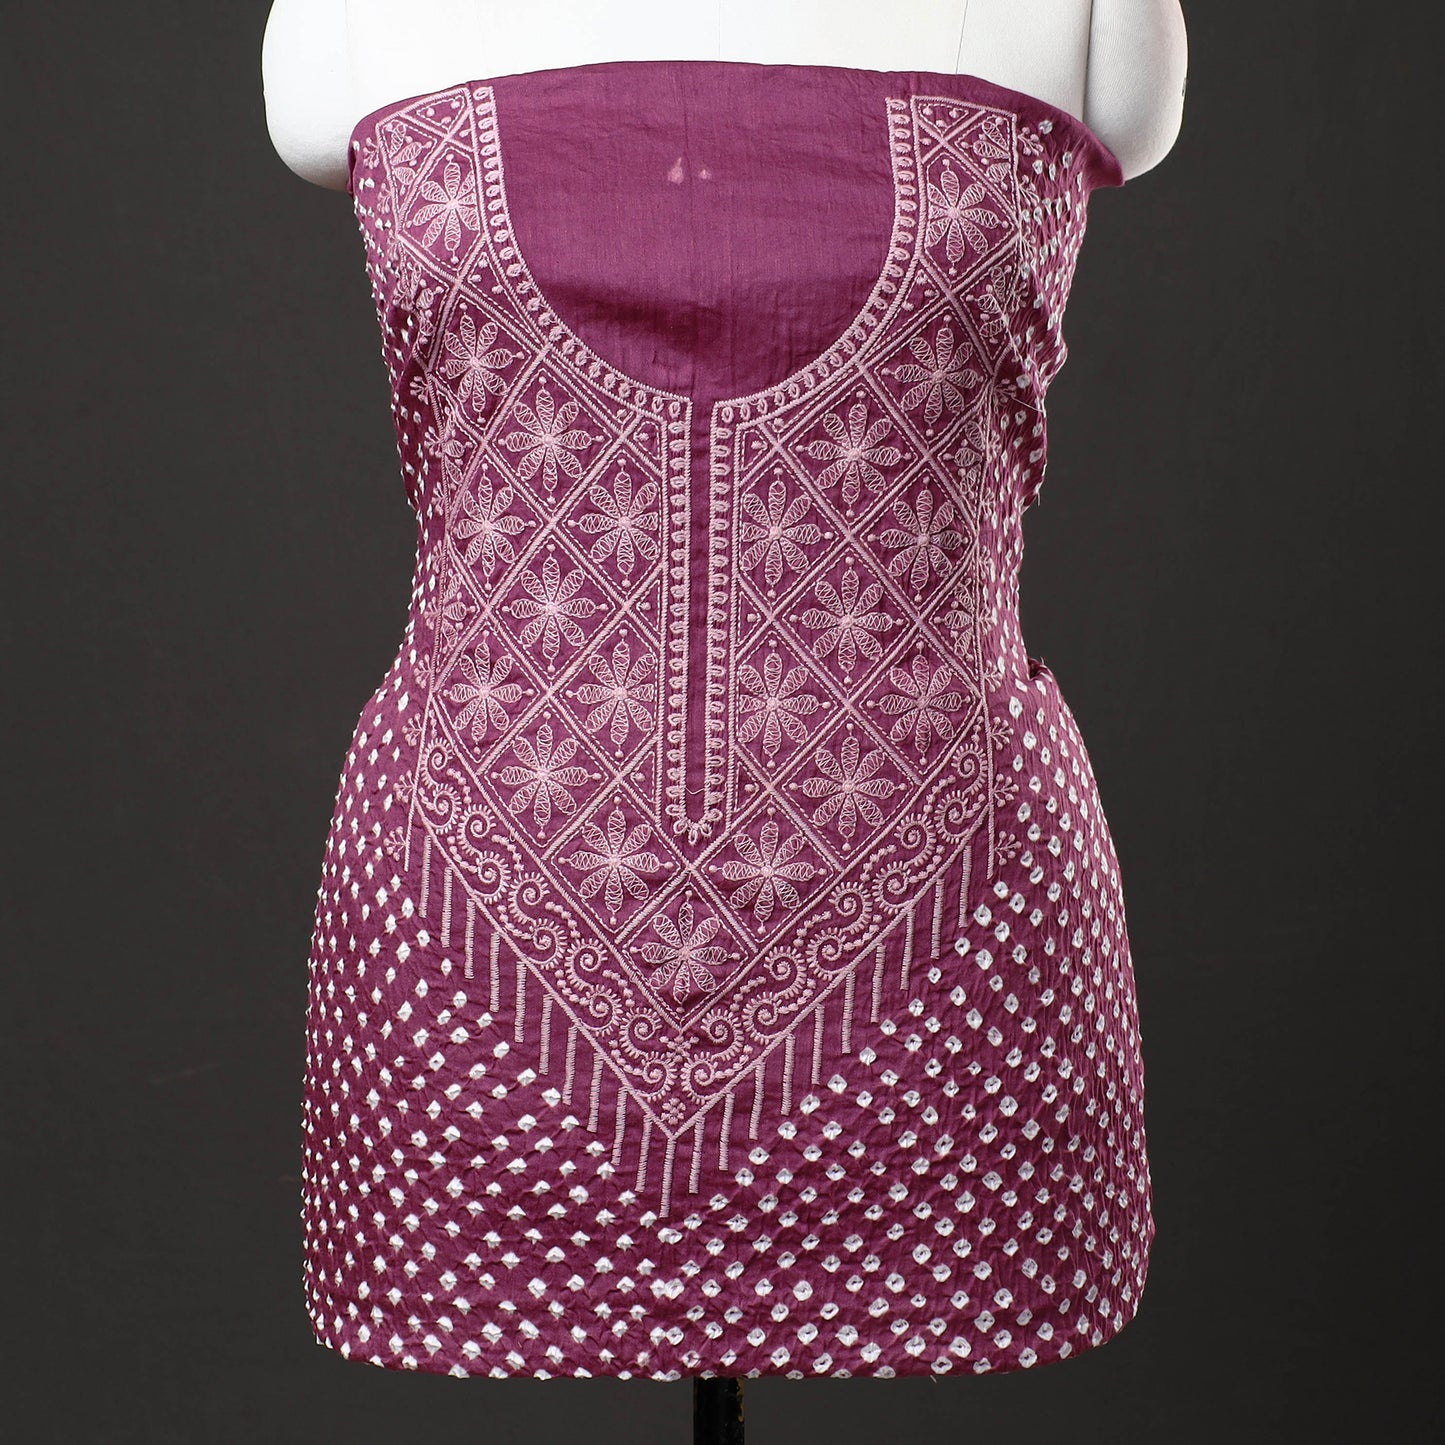 3pc Kutch Bandhani Tie-Dye Satin Cotton Suit Material Set 265